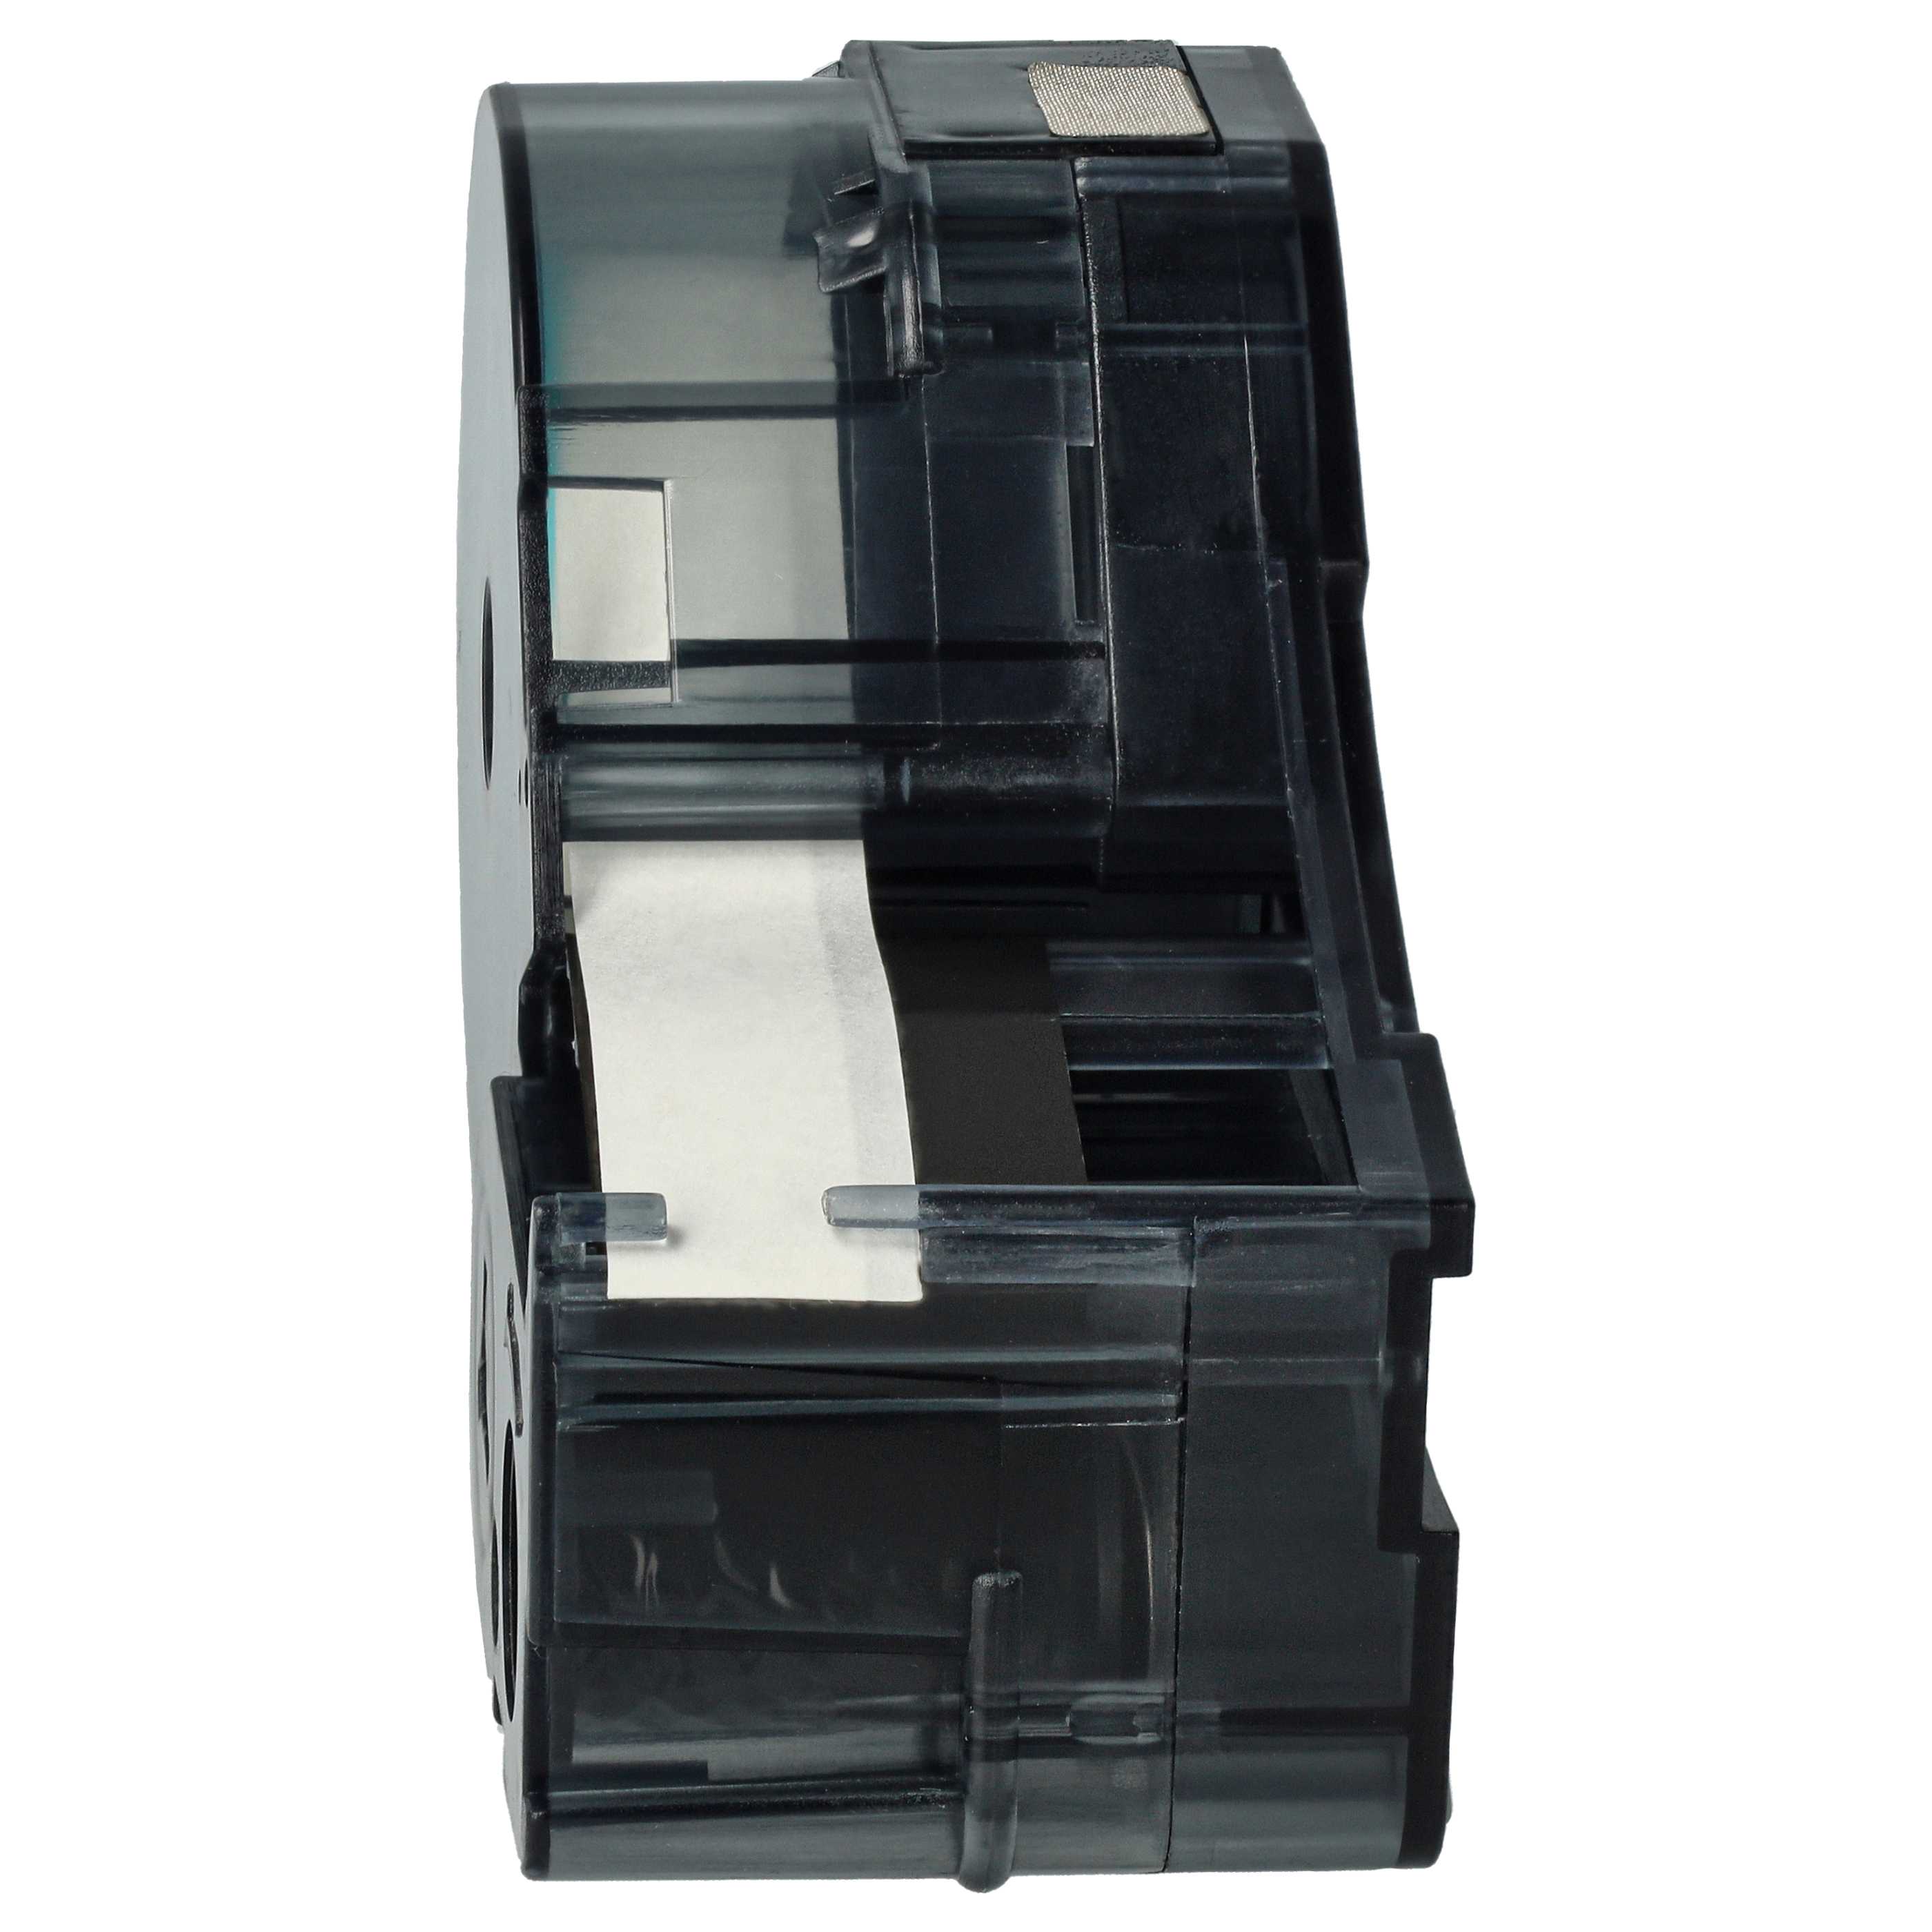 5x Casete cinta escritura reemplaza Brady M21-375-423 Negro su Blanco